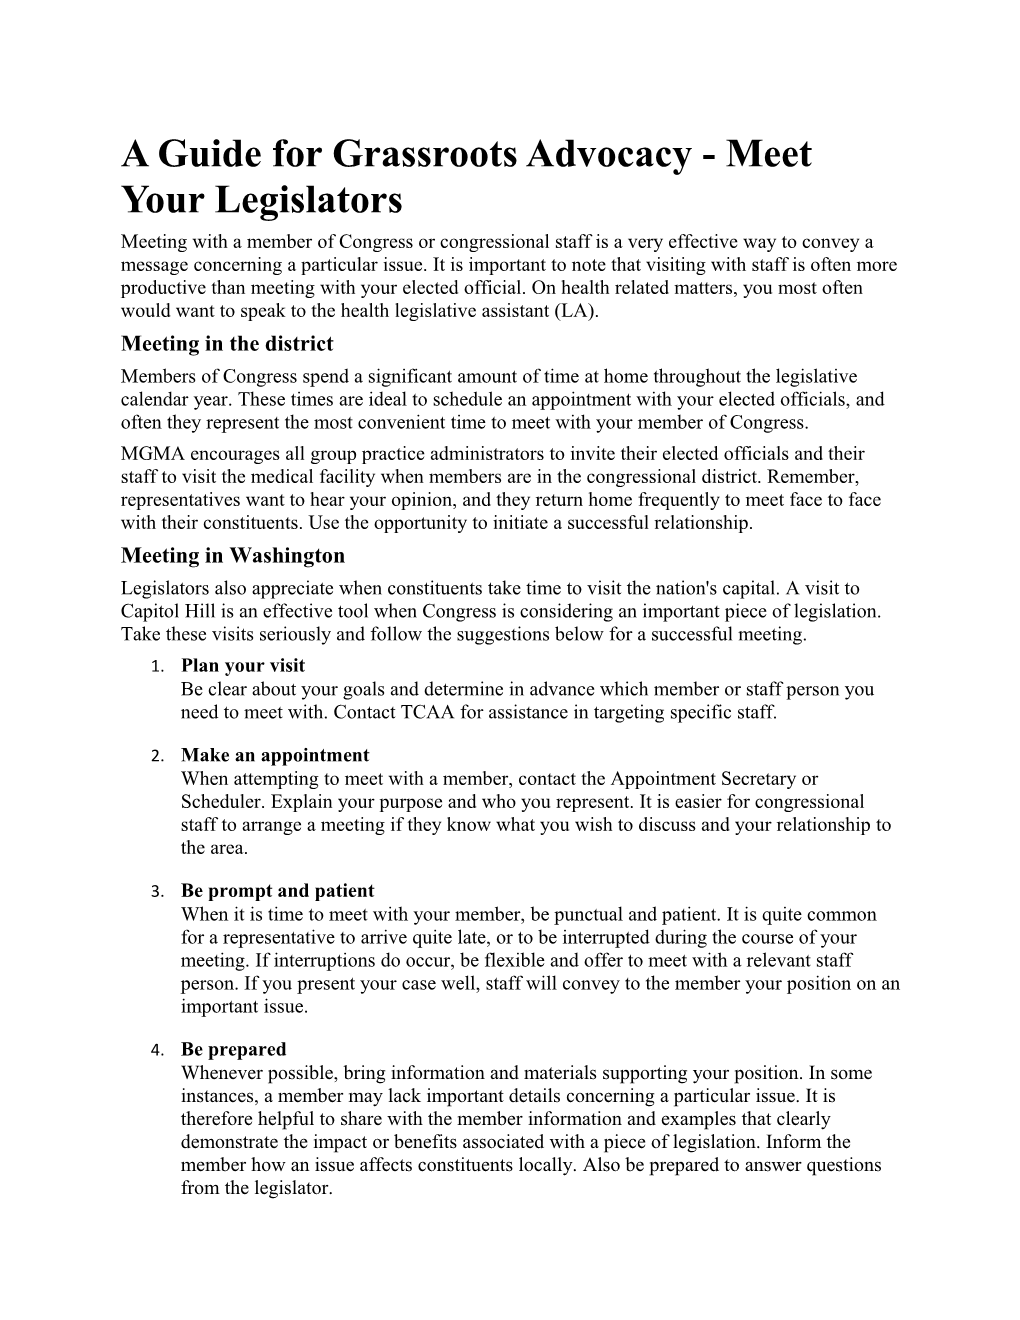 A Guide for Grassroots Advocacy - Meet Your Legislators